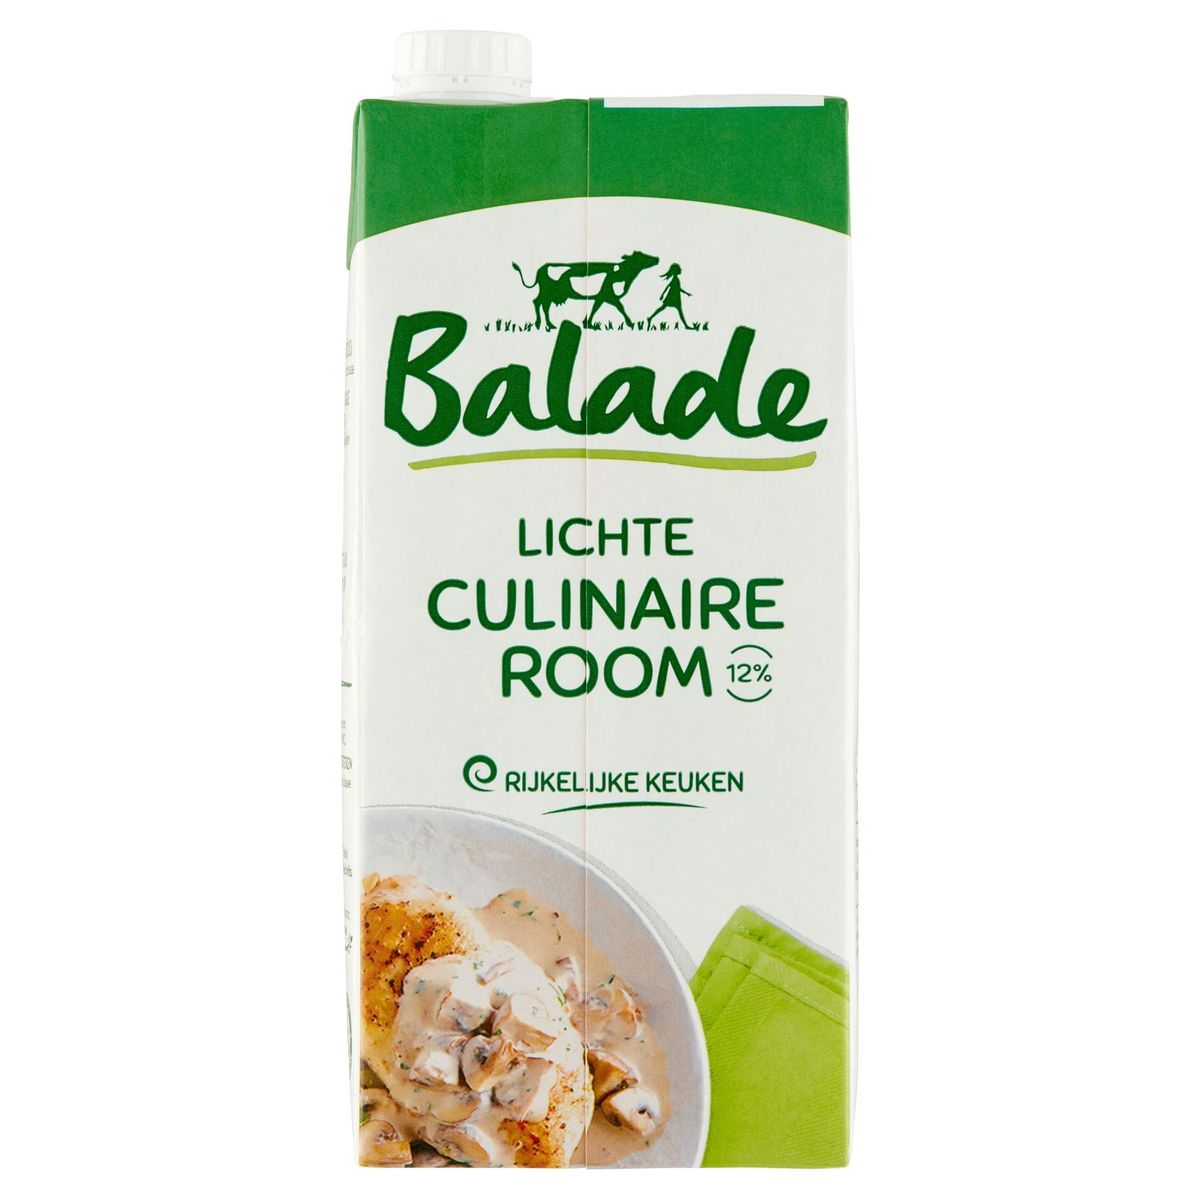 Balade Lichte Culinaire Room 12% 1 L